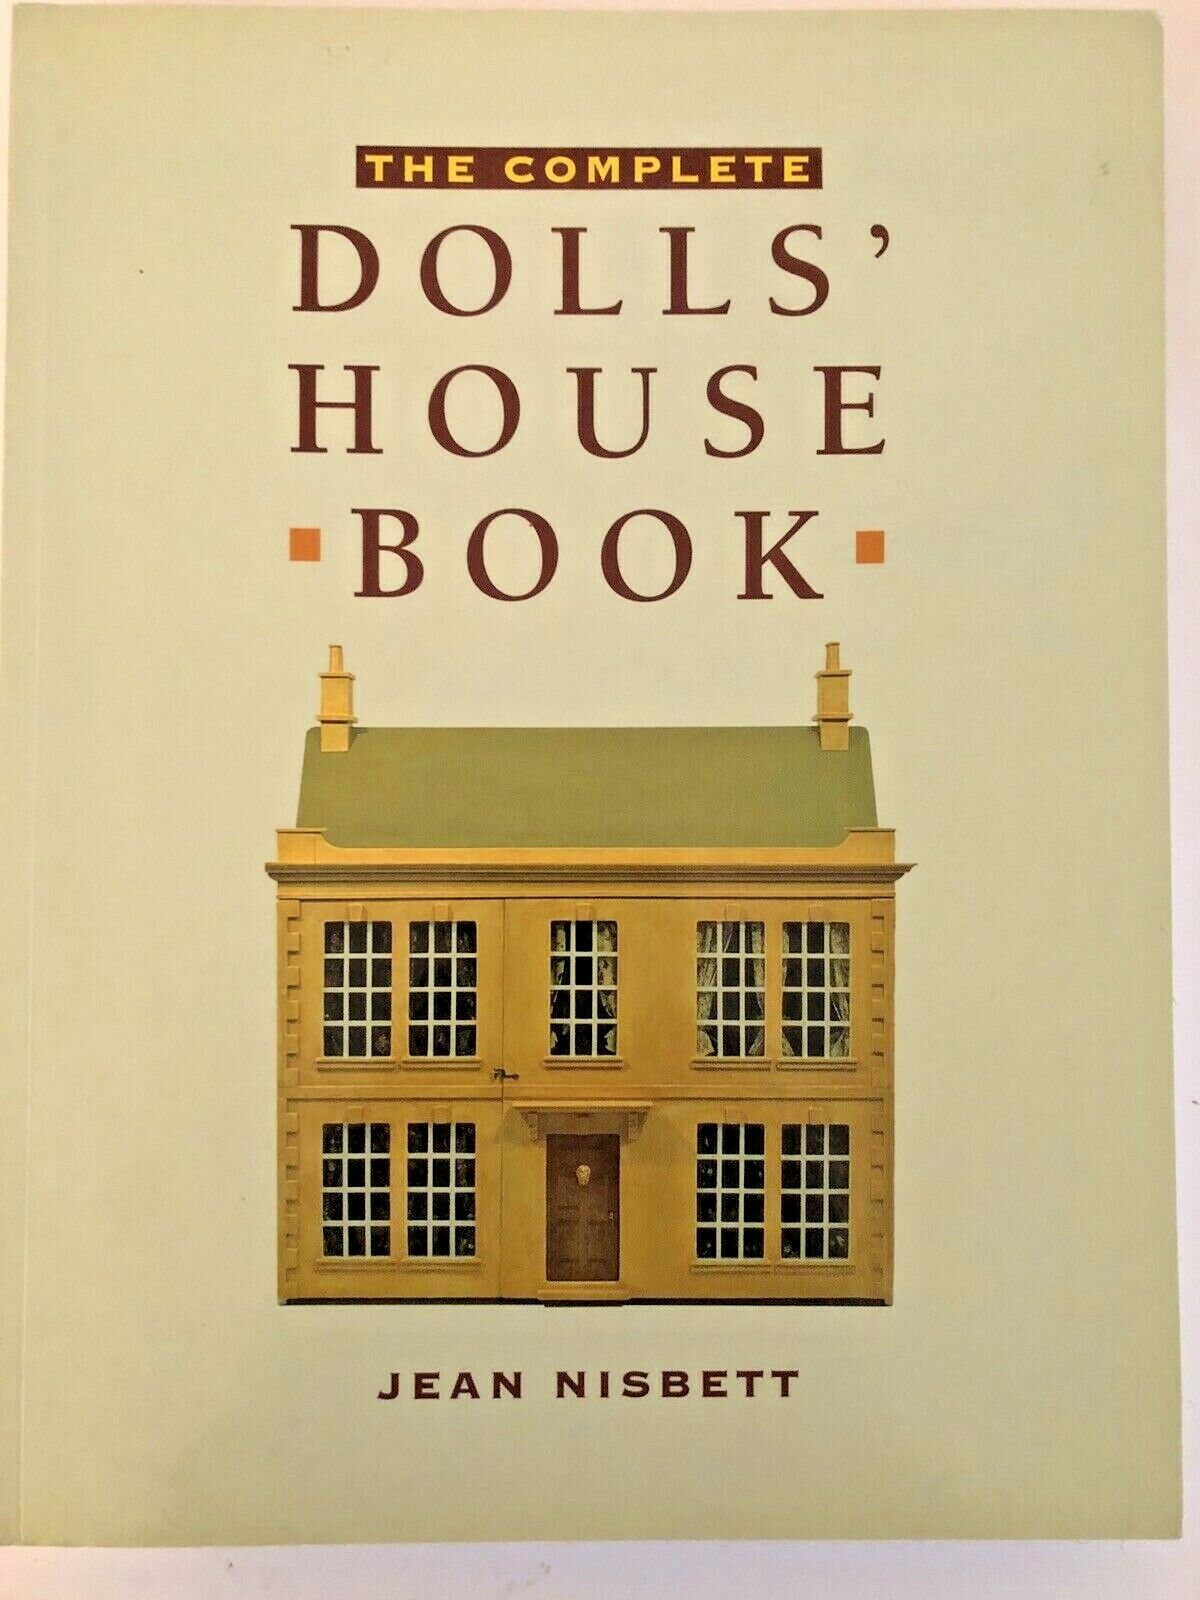 The Complete Dolls' House Book Jean Nisbett